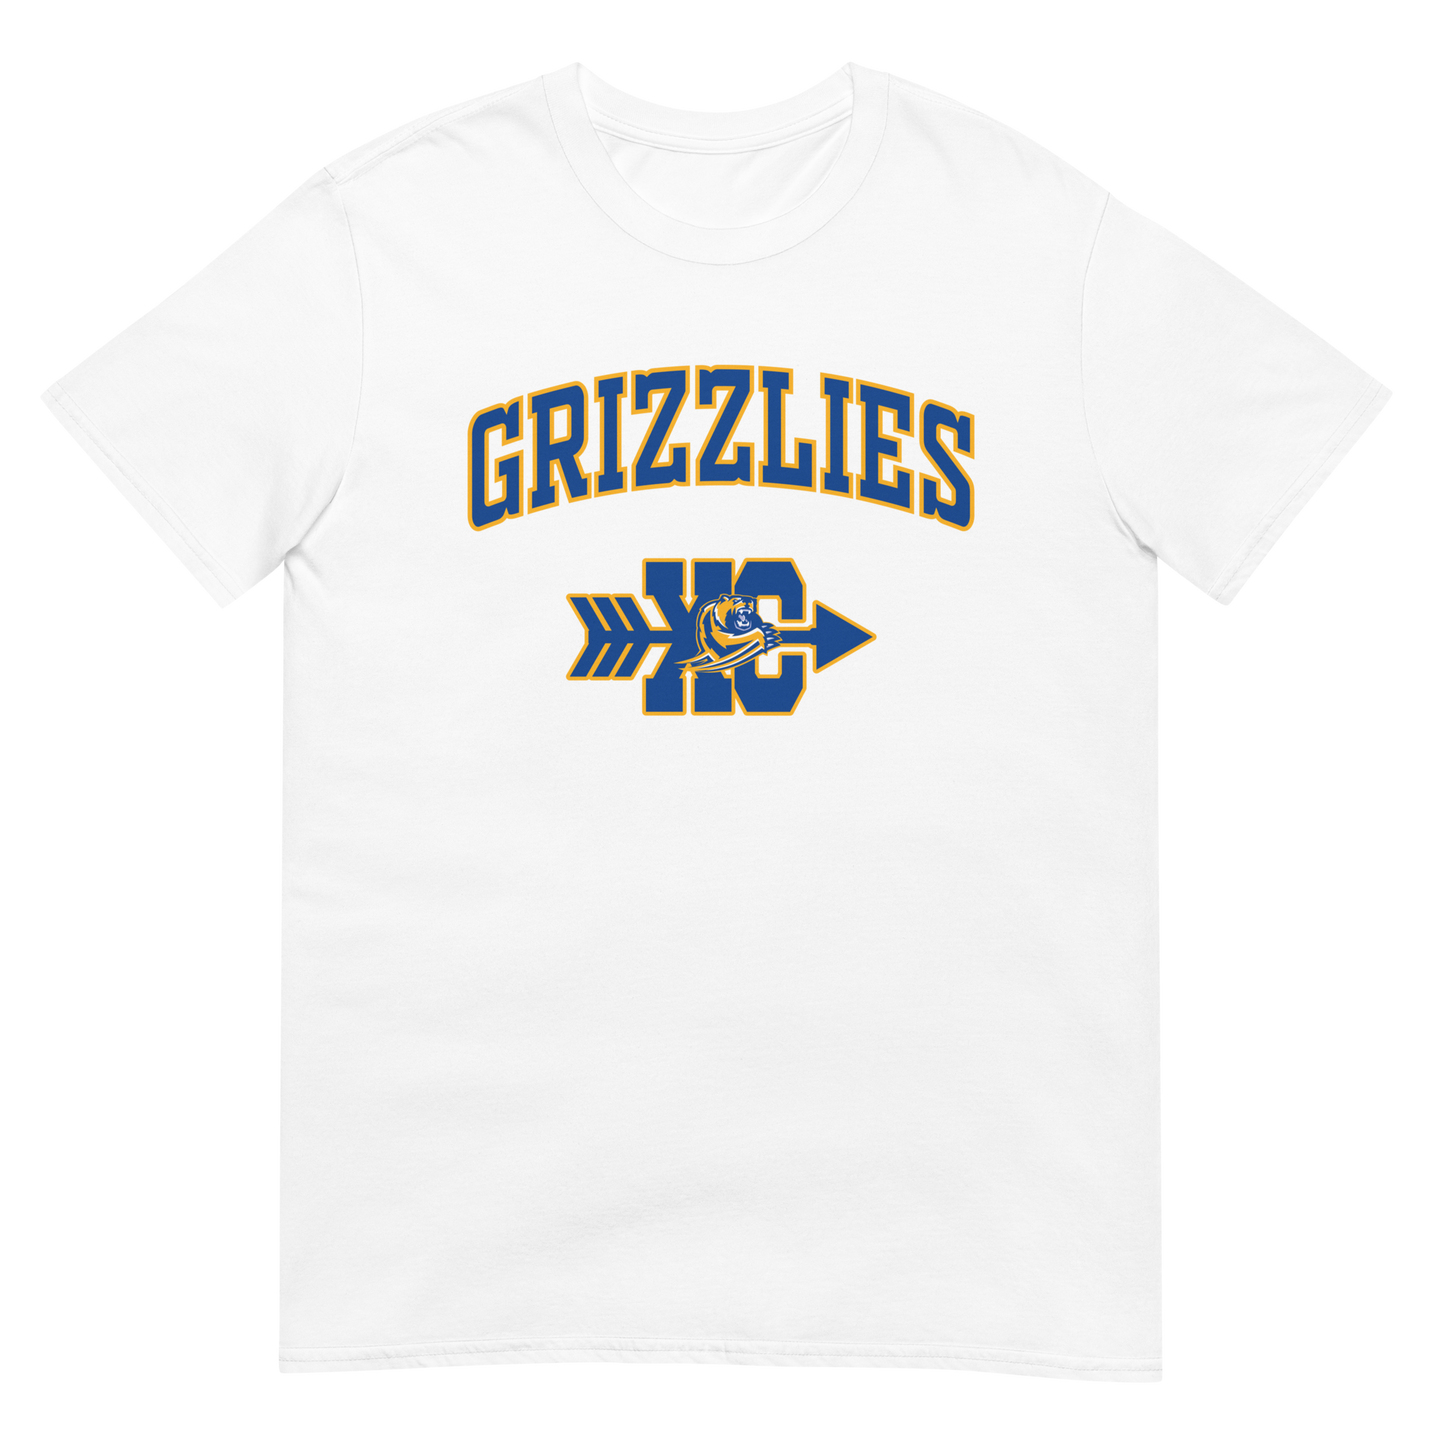 Grizzlies Cross Country Short-Sleeve Unisex T-Shirt